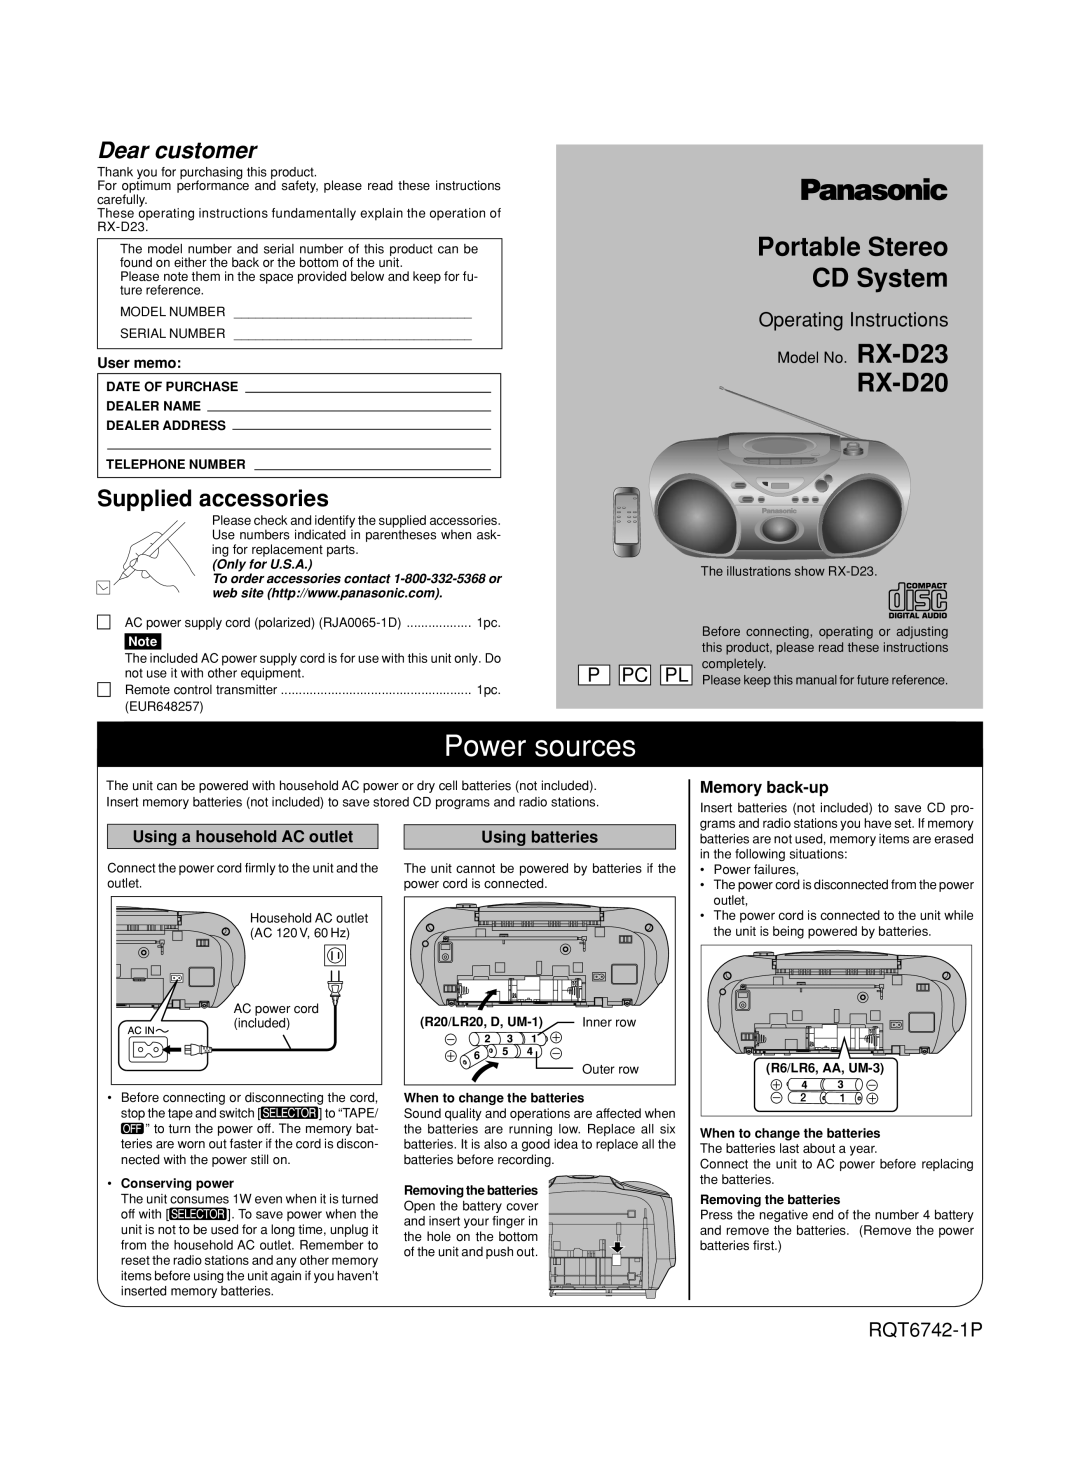 Panasonic RX-D23 operating instructions Power sources, Supplied accessories, Operating Instructions, RQT6742-1P, RX-D20 